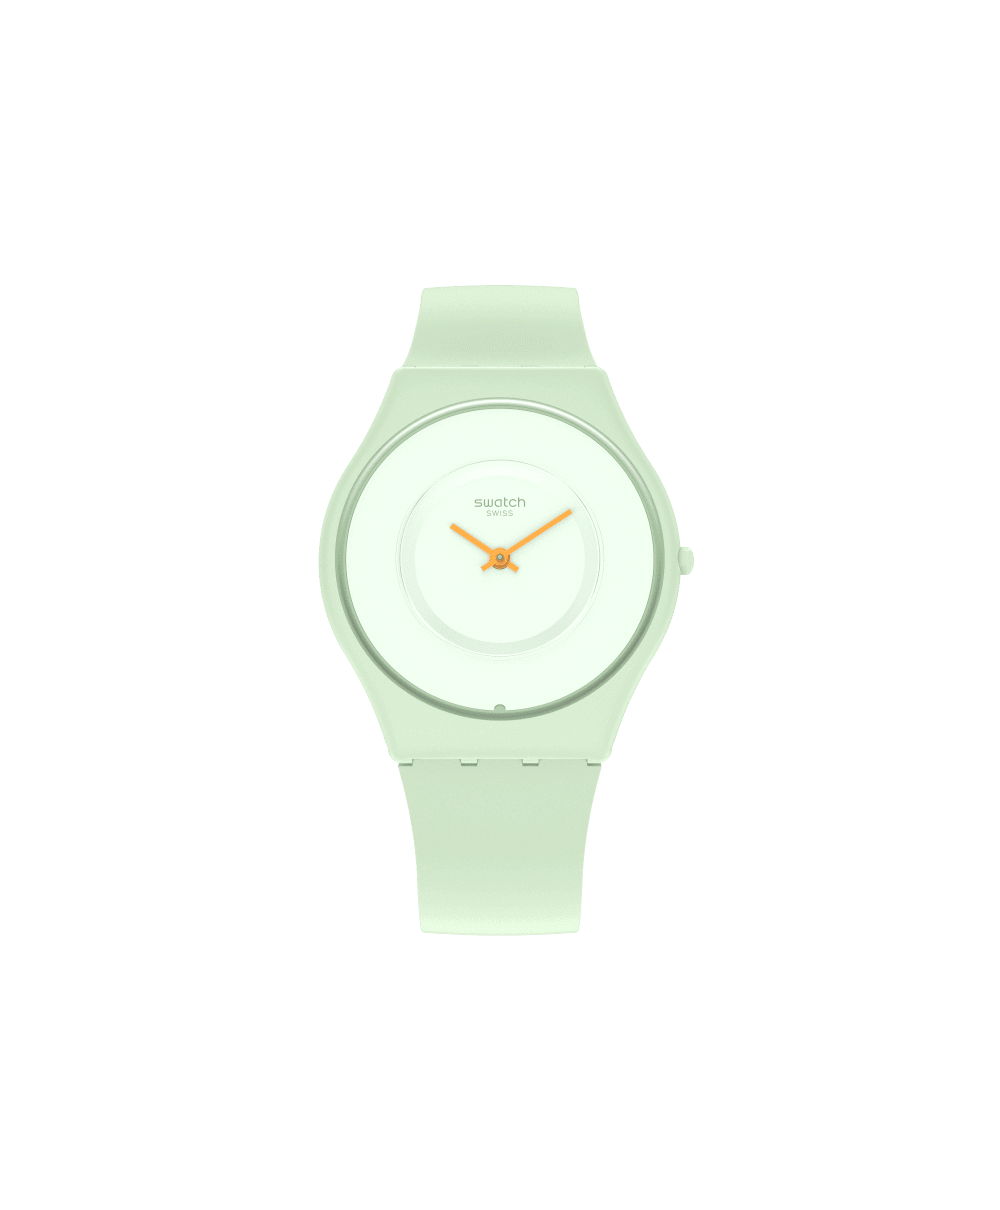 Reloj Swatch Caricia Verde SS09G101